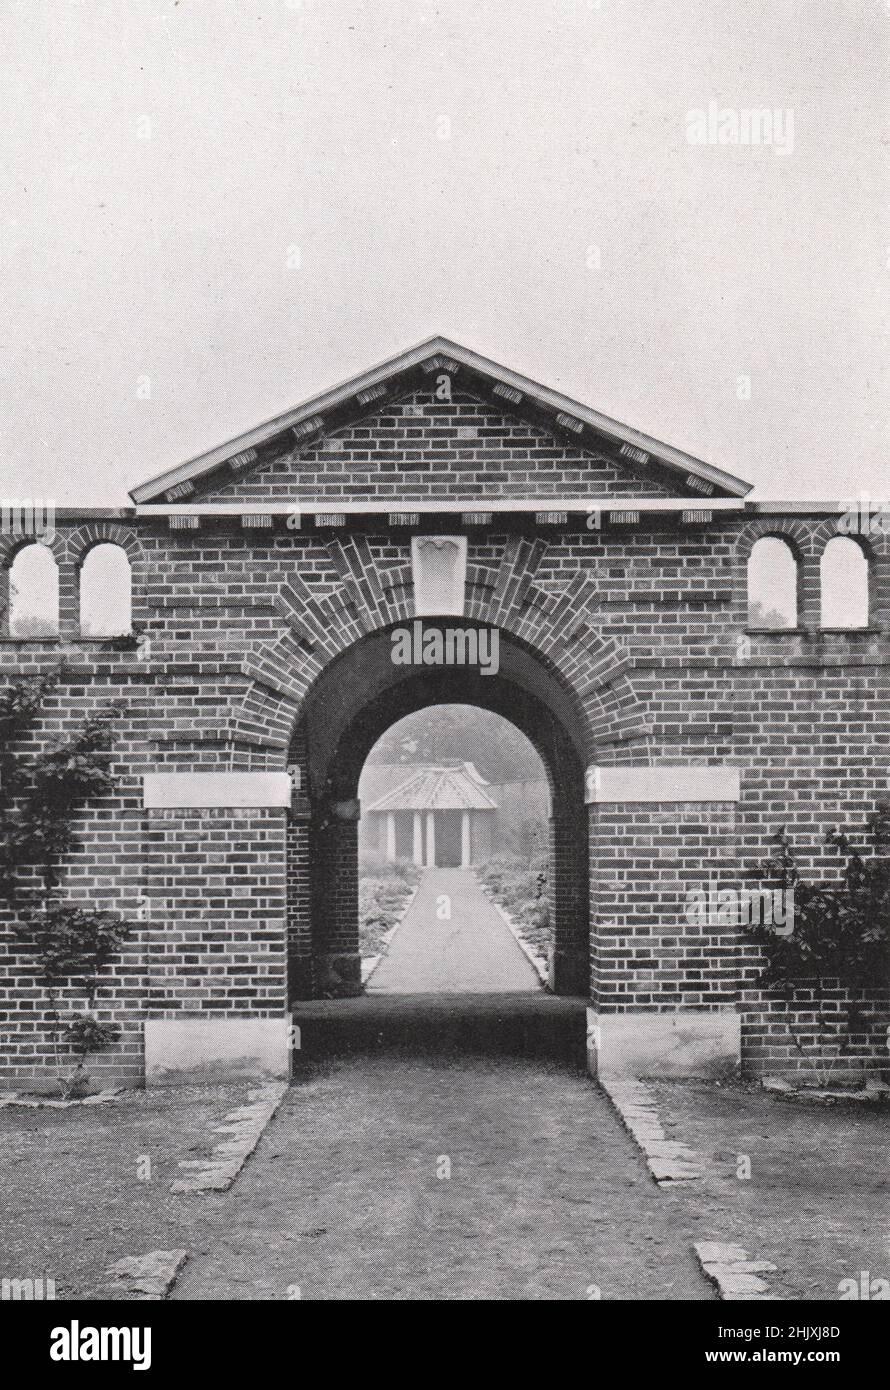 Arco en una finca. Inglaterra. Niven & Wigglesworth, Arquitectos (1908) Foto de stock